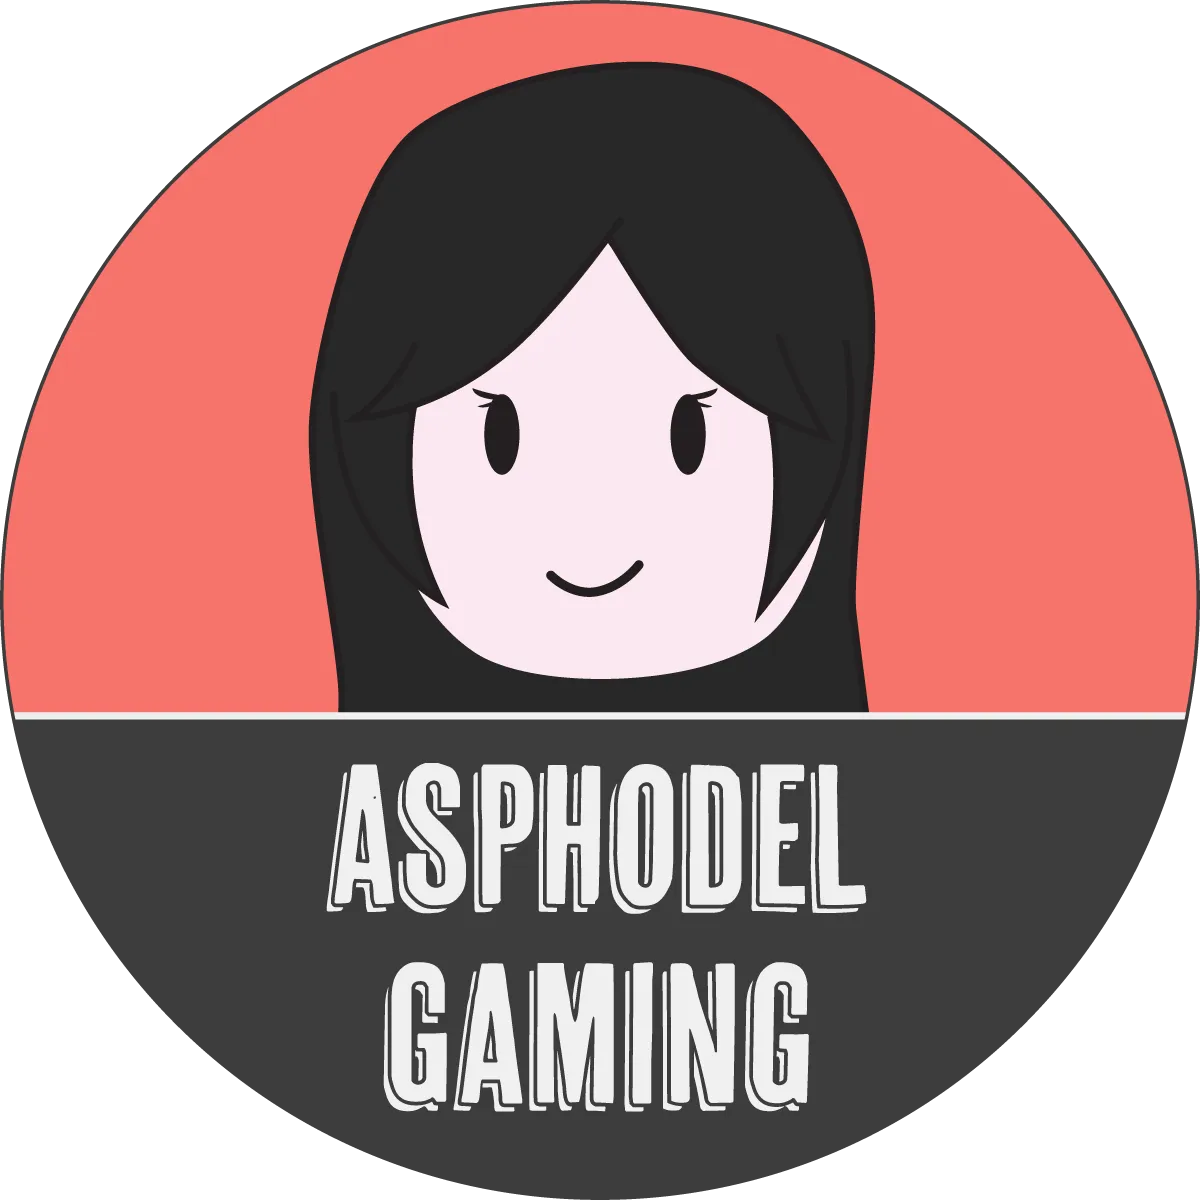 Twisted Metal 2 Review & Videos • Asphodel Gaming